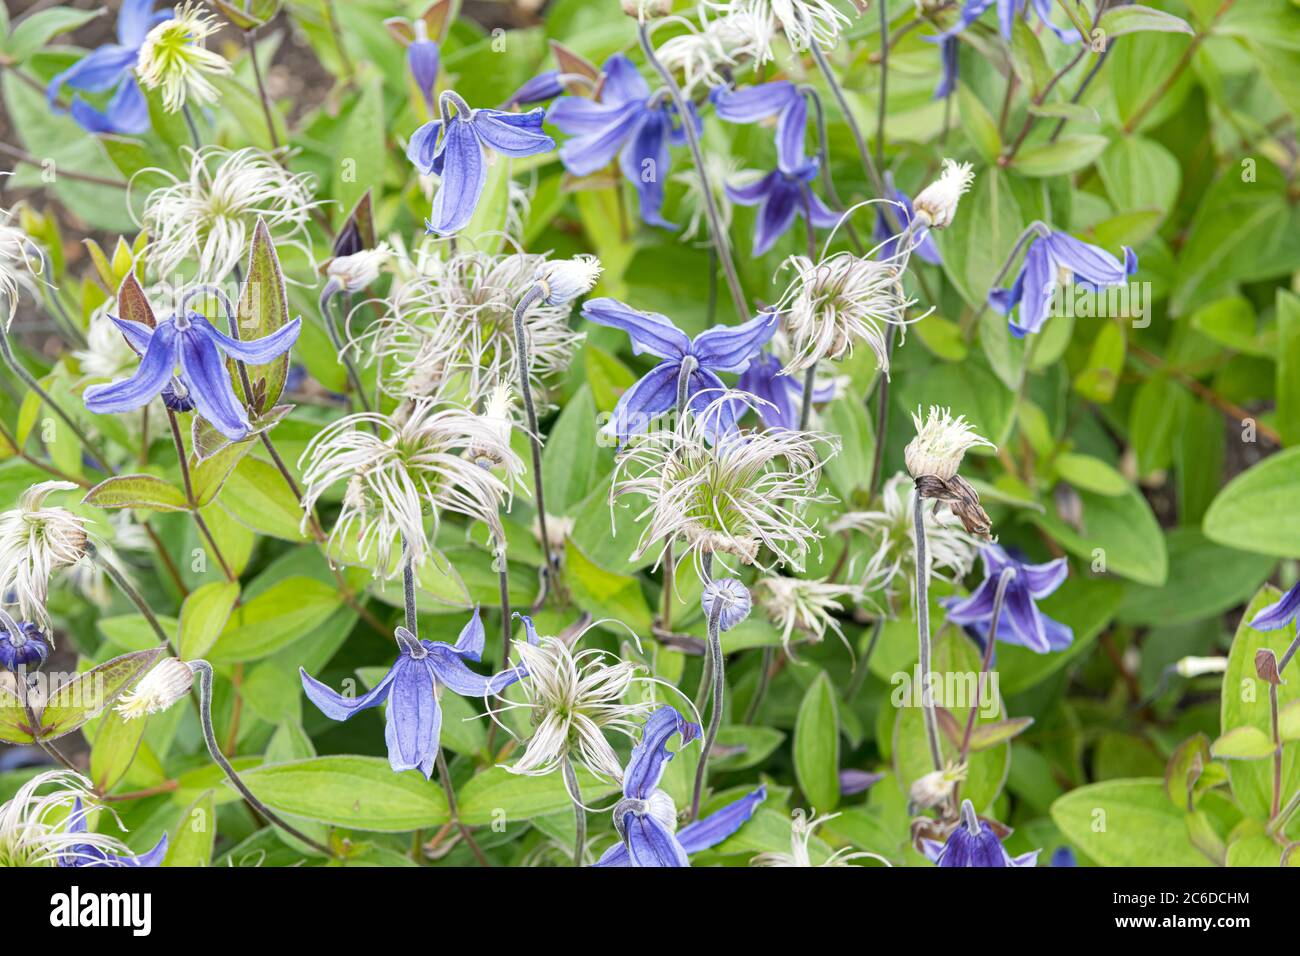 Waldrebe, Clematis integrifolia Blue Ribbon, Clematis, Clematis integrifolia Blue Ribbon Stock Photo